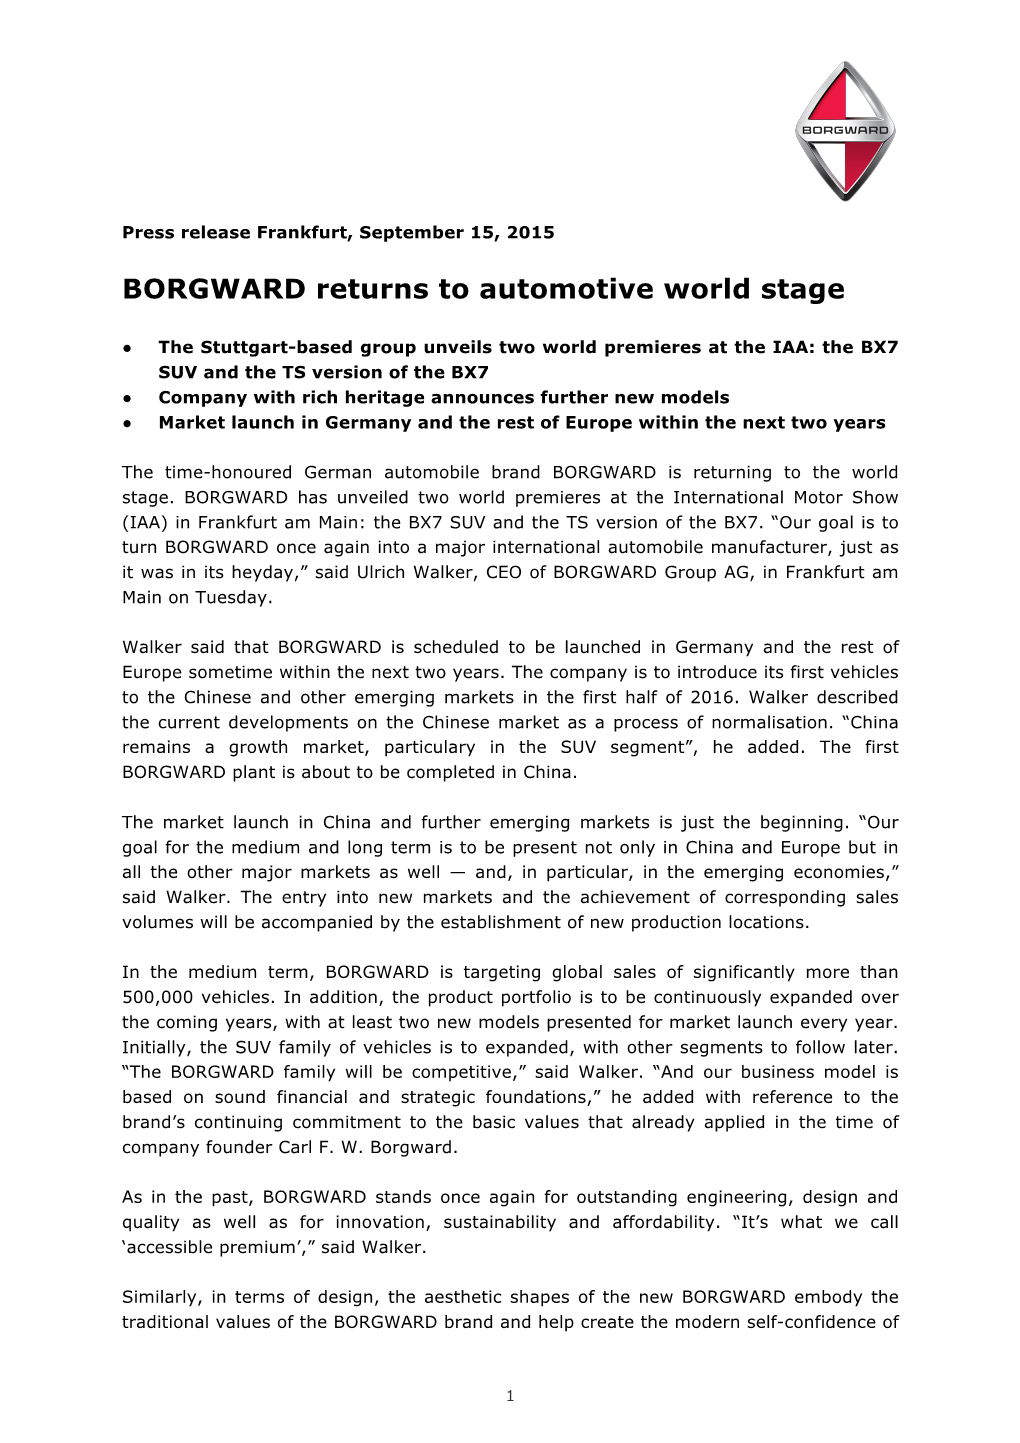 BORGWARD Returns to Automotive World Stage